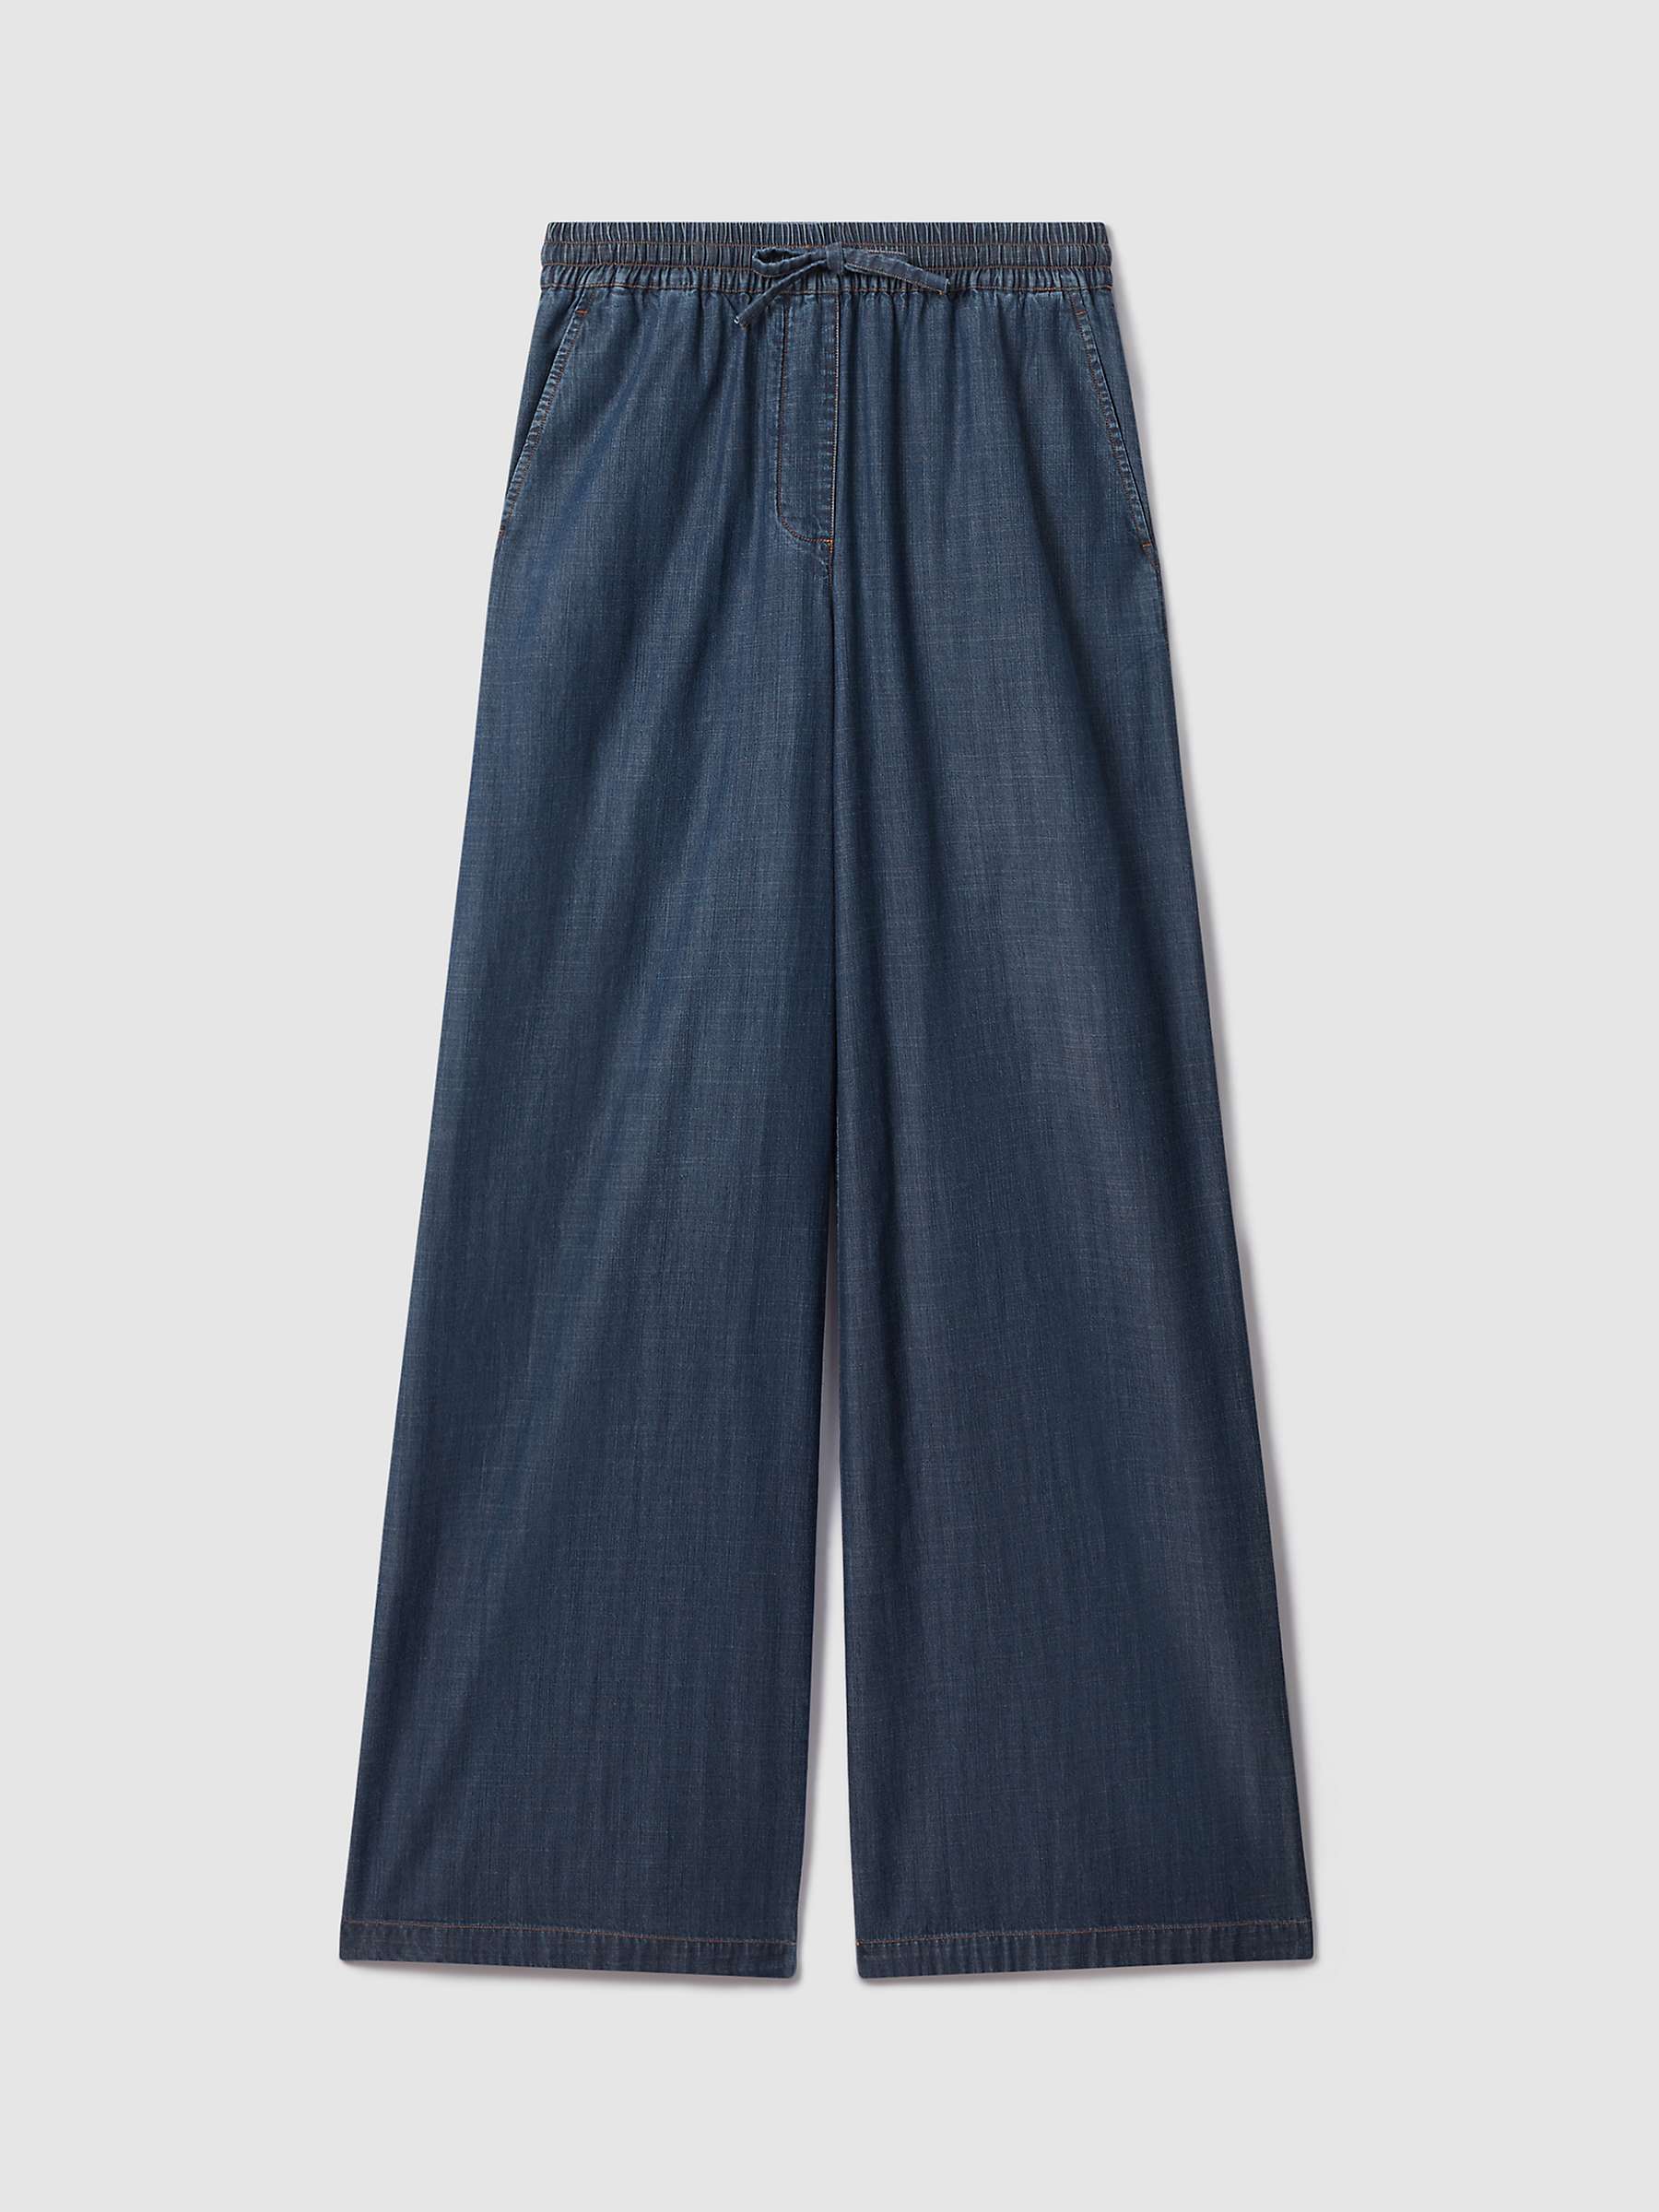 Buy Reiss Carter Denim Wide Leg Trousers, Dark Blue Online at johnlewis.com